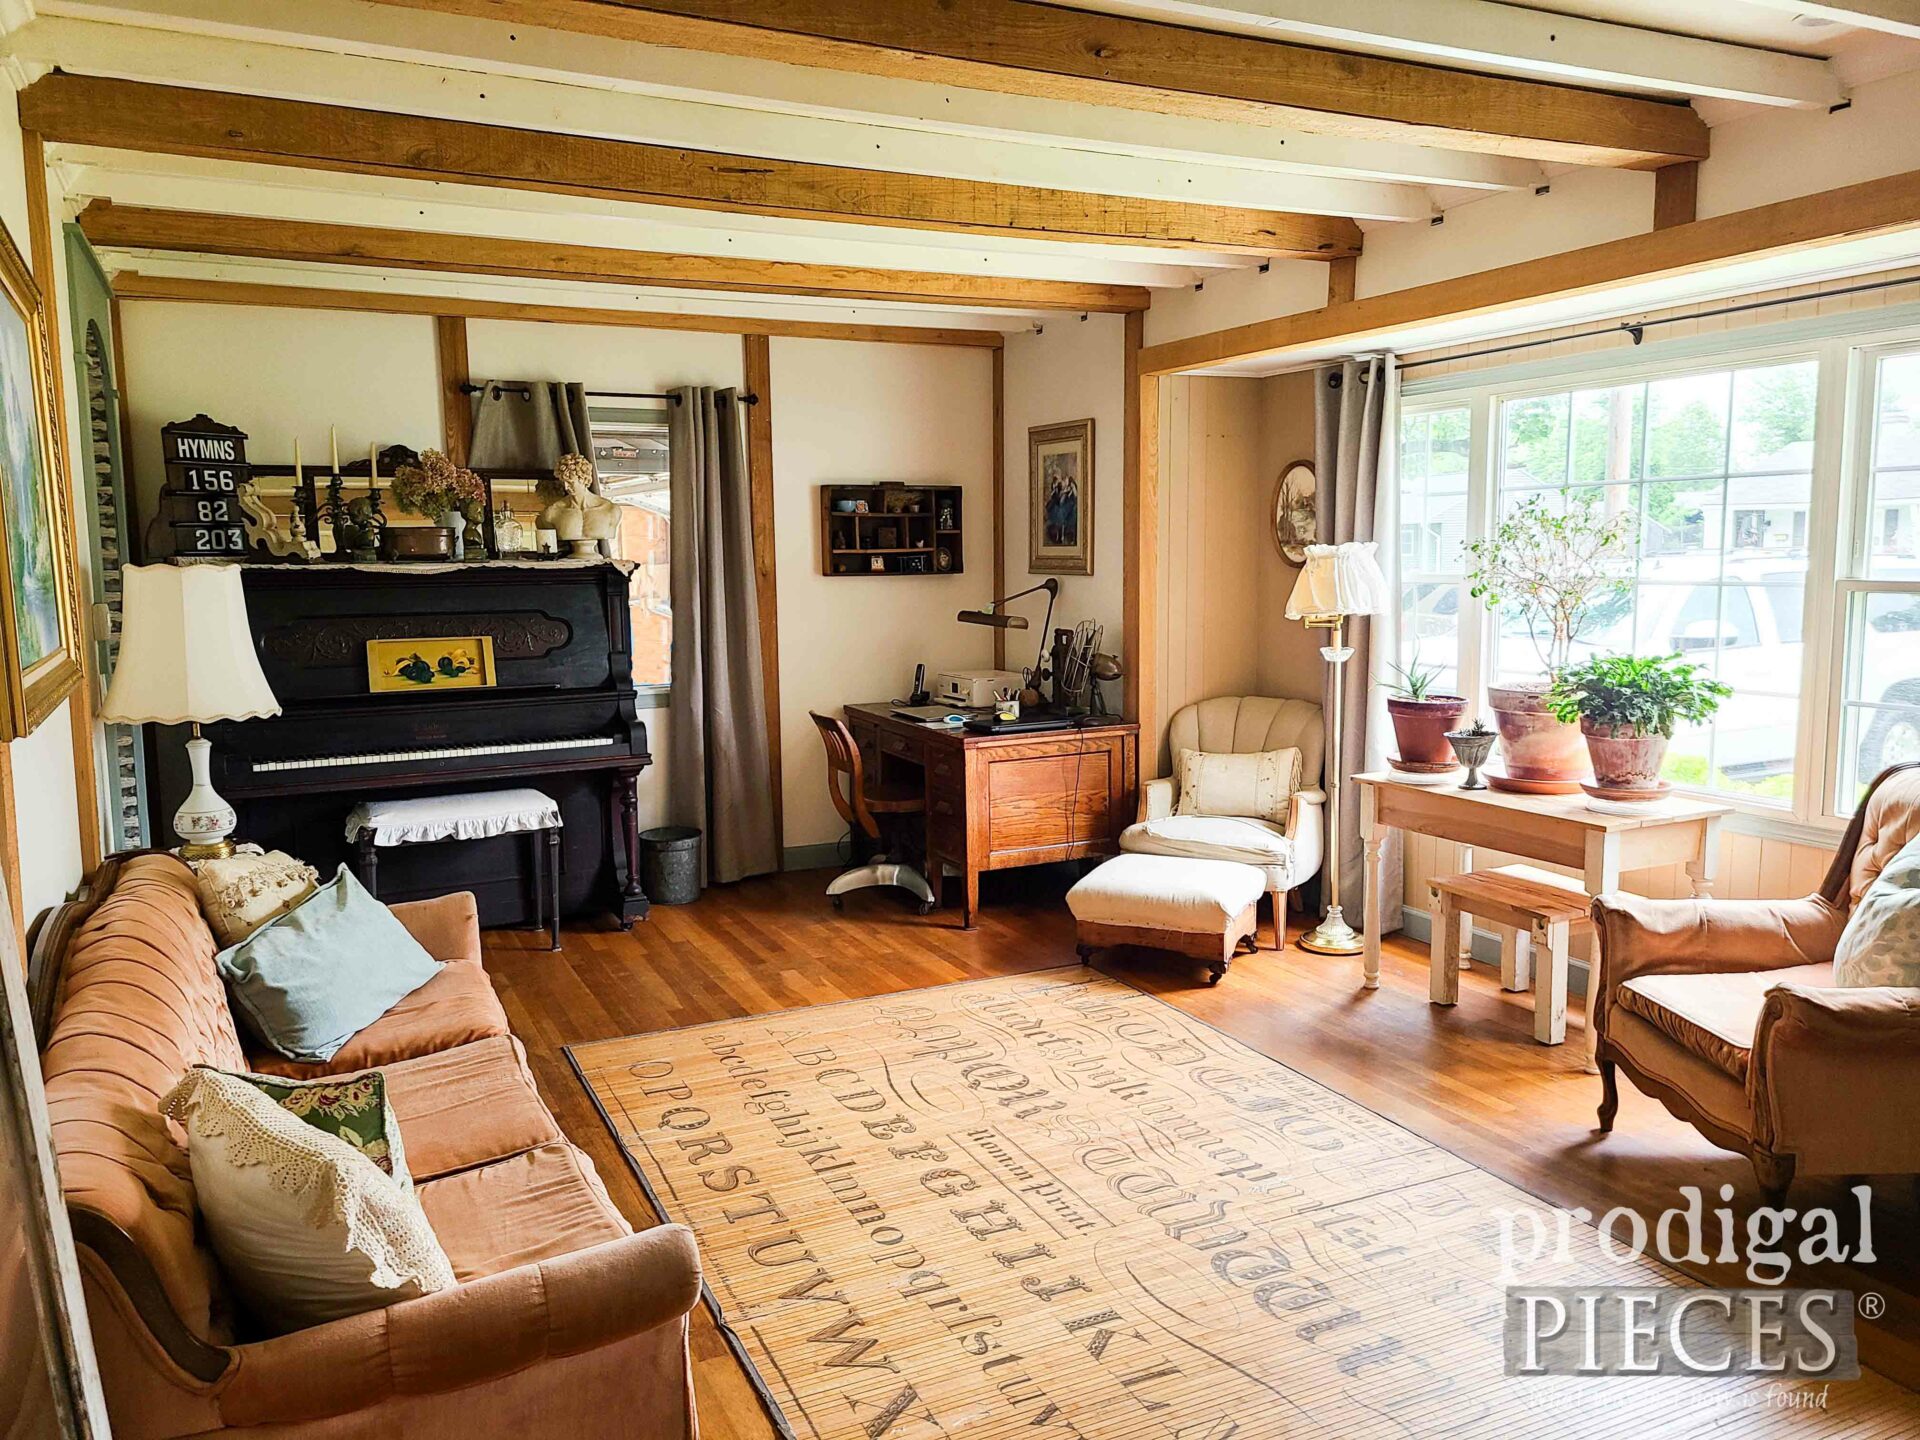 Upright Grand Piano in Living Room | prodigalpieces.com #prodigalpieces